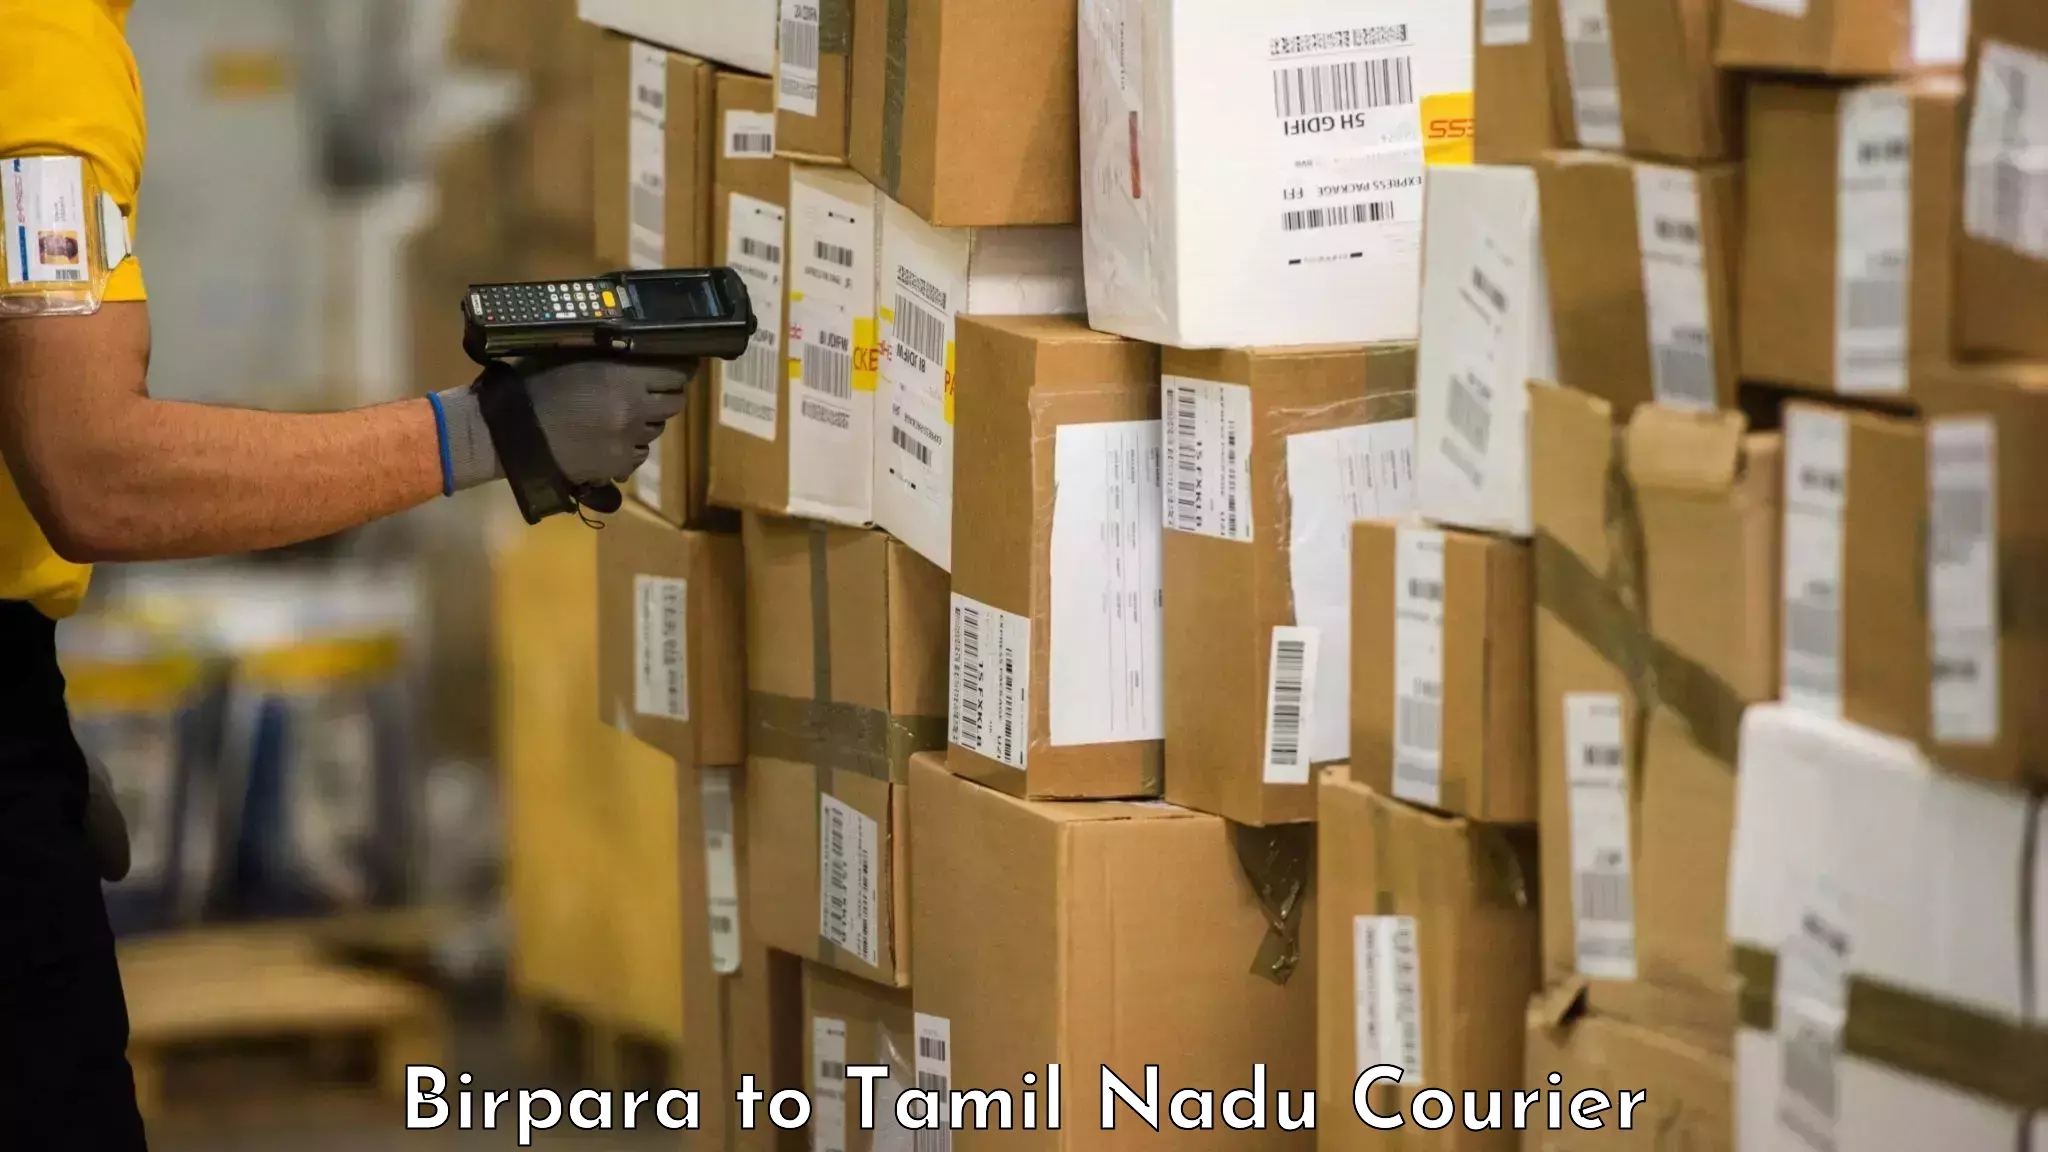 Urgent luggage shipment Birpara to Periyakulam